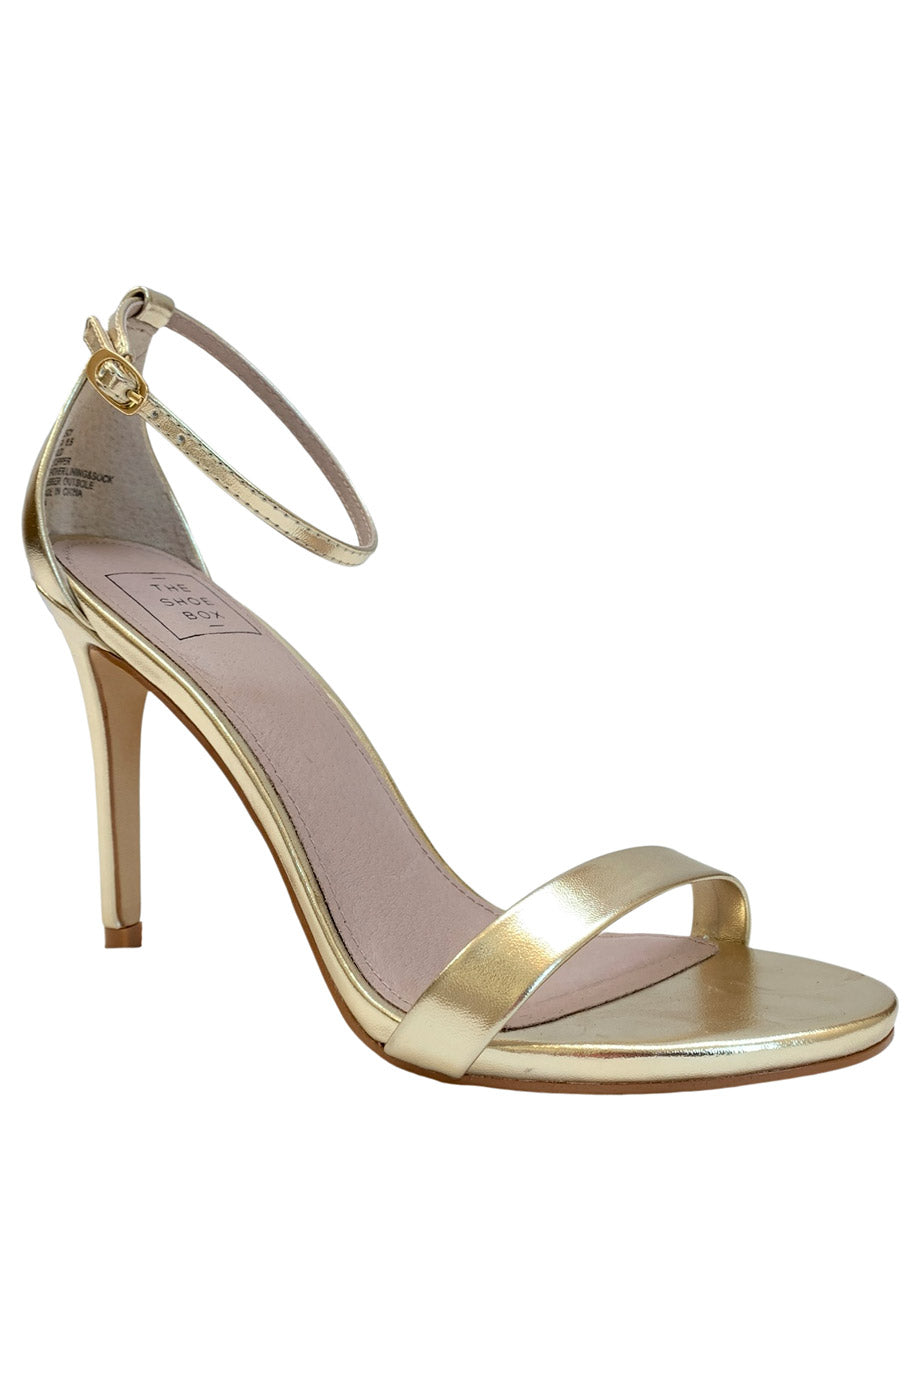 metallic gold strappy heels